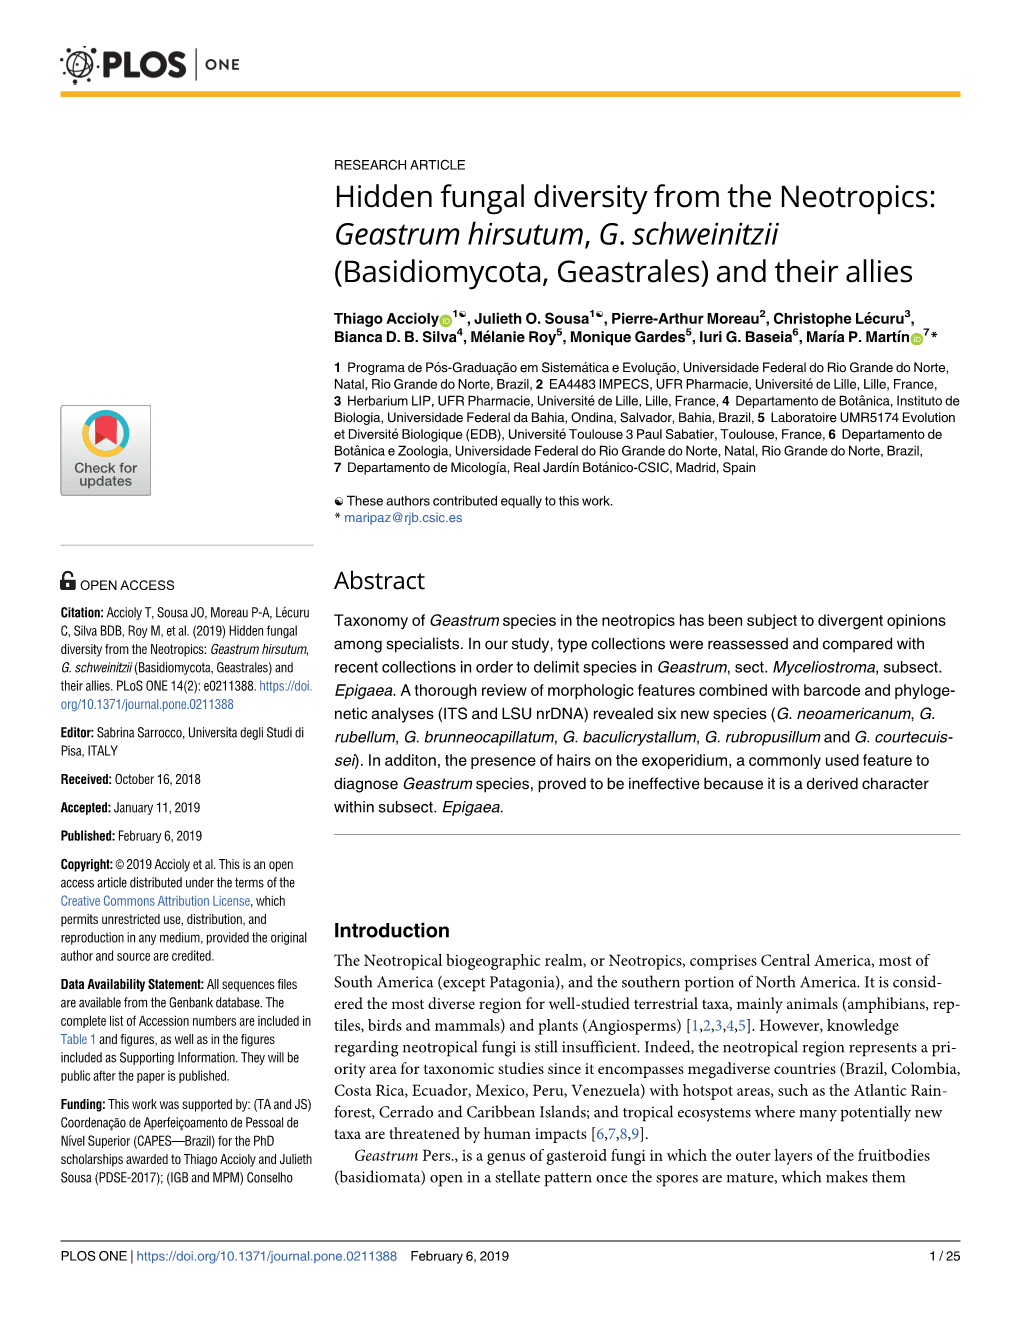 Hidden Fungal Diversity from the Neotropics: Geastrum Hirsutum, G